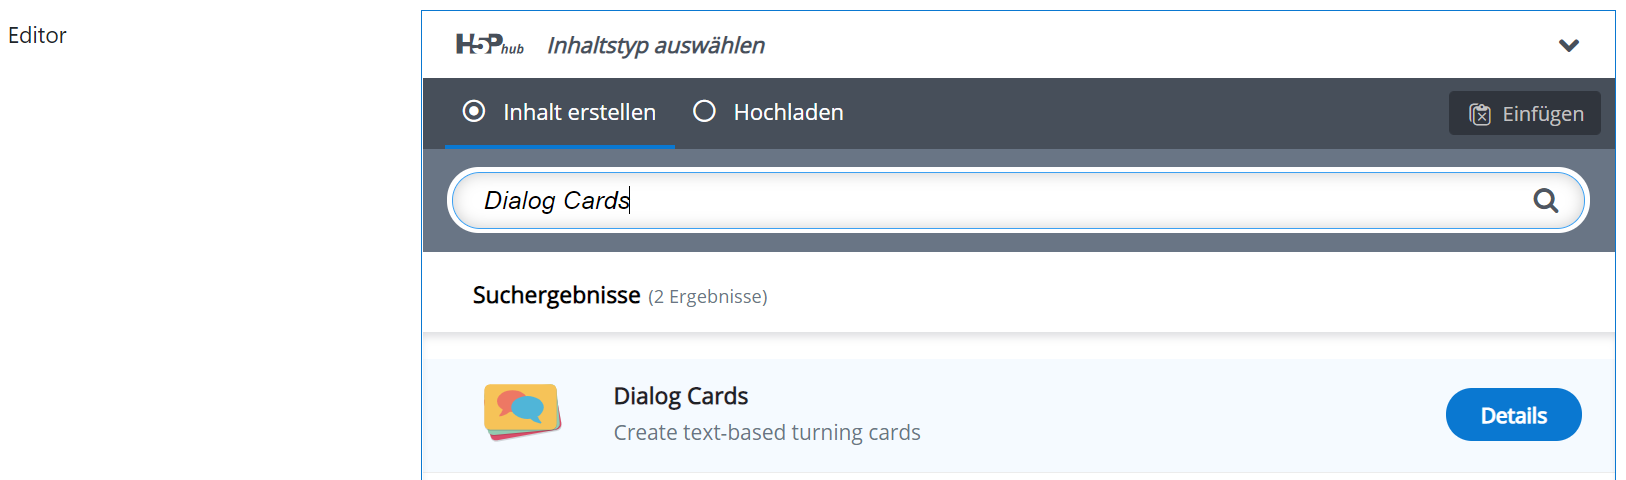 h5p_dialog_cards_editor.png